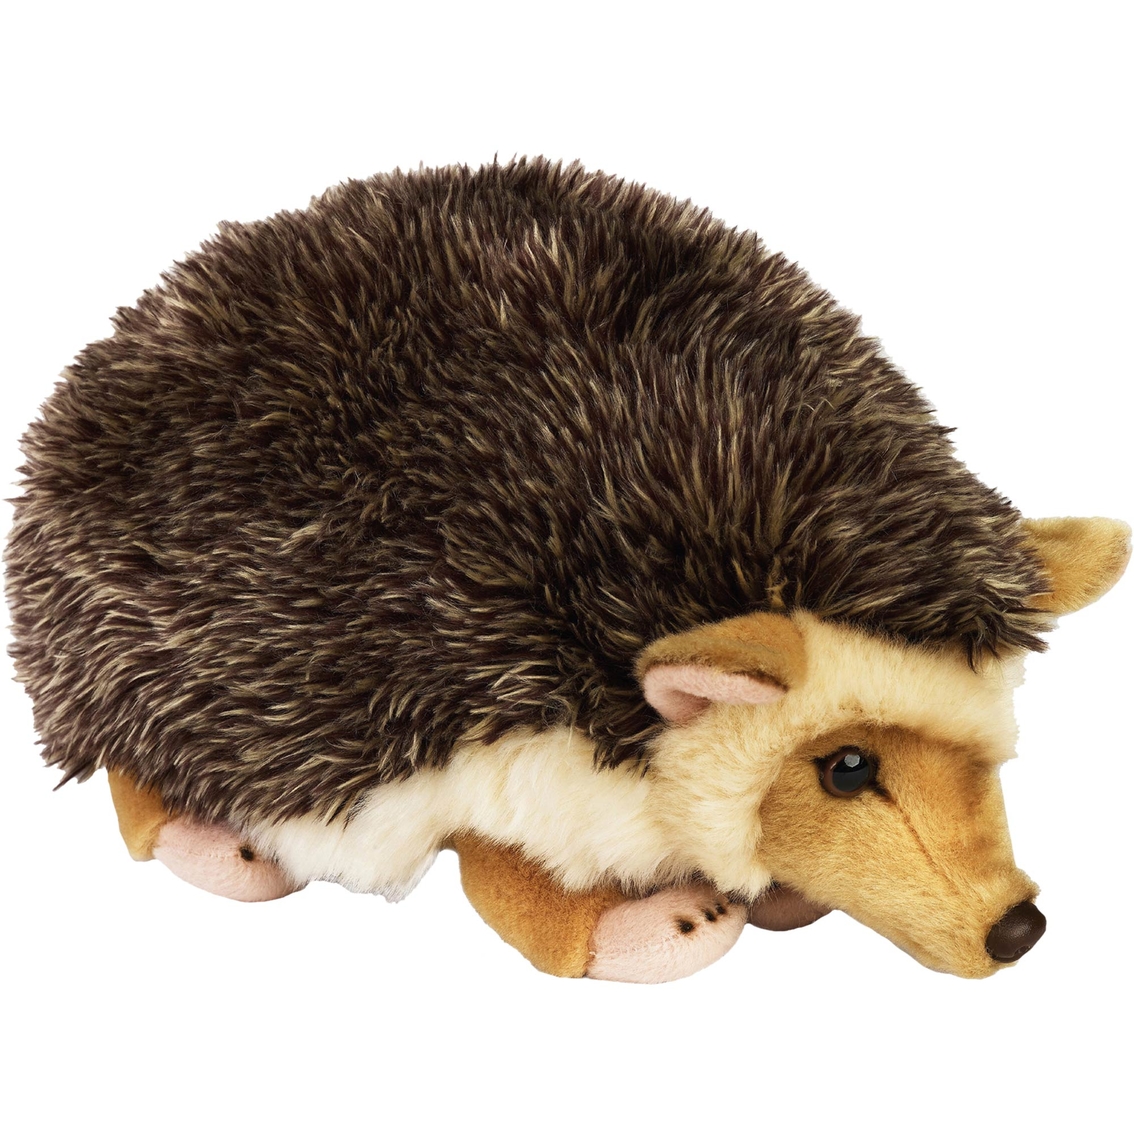 National Geographic Plush Desert Hedgehog